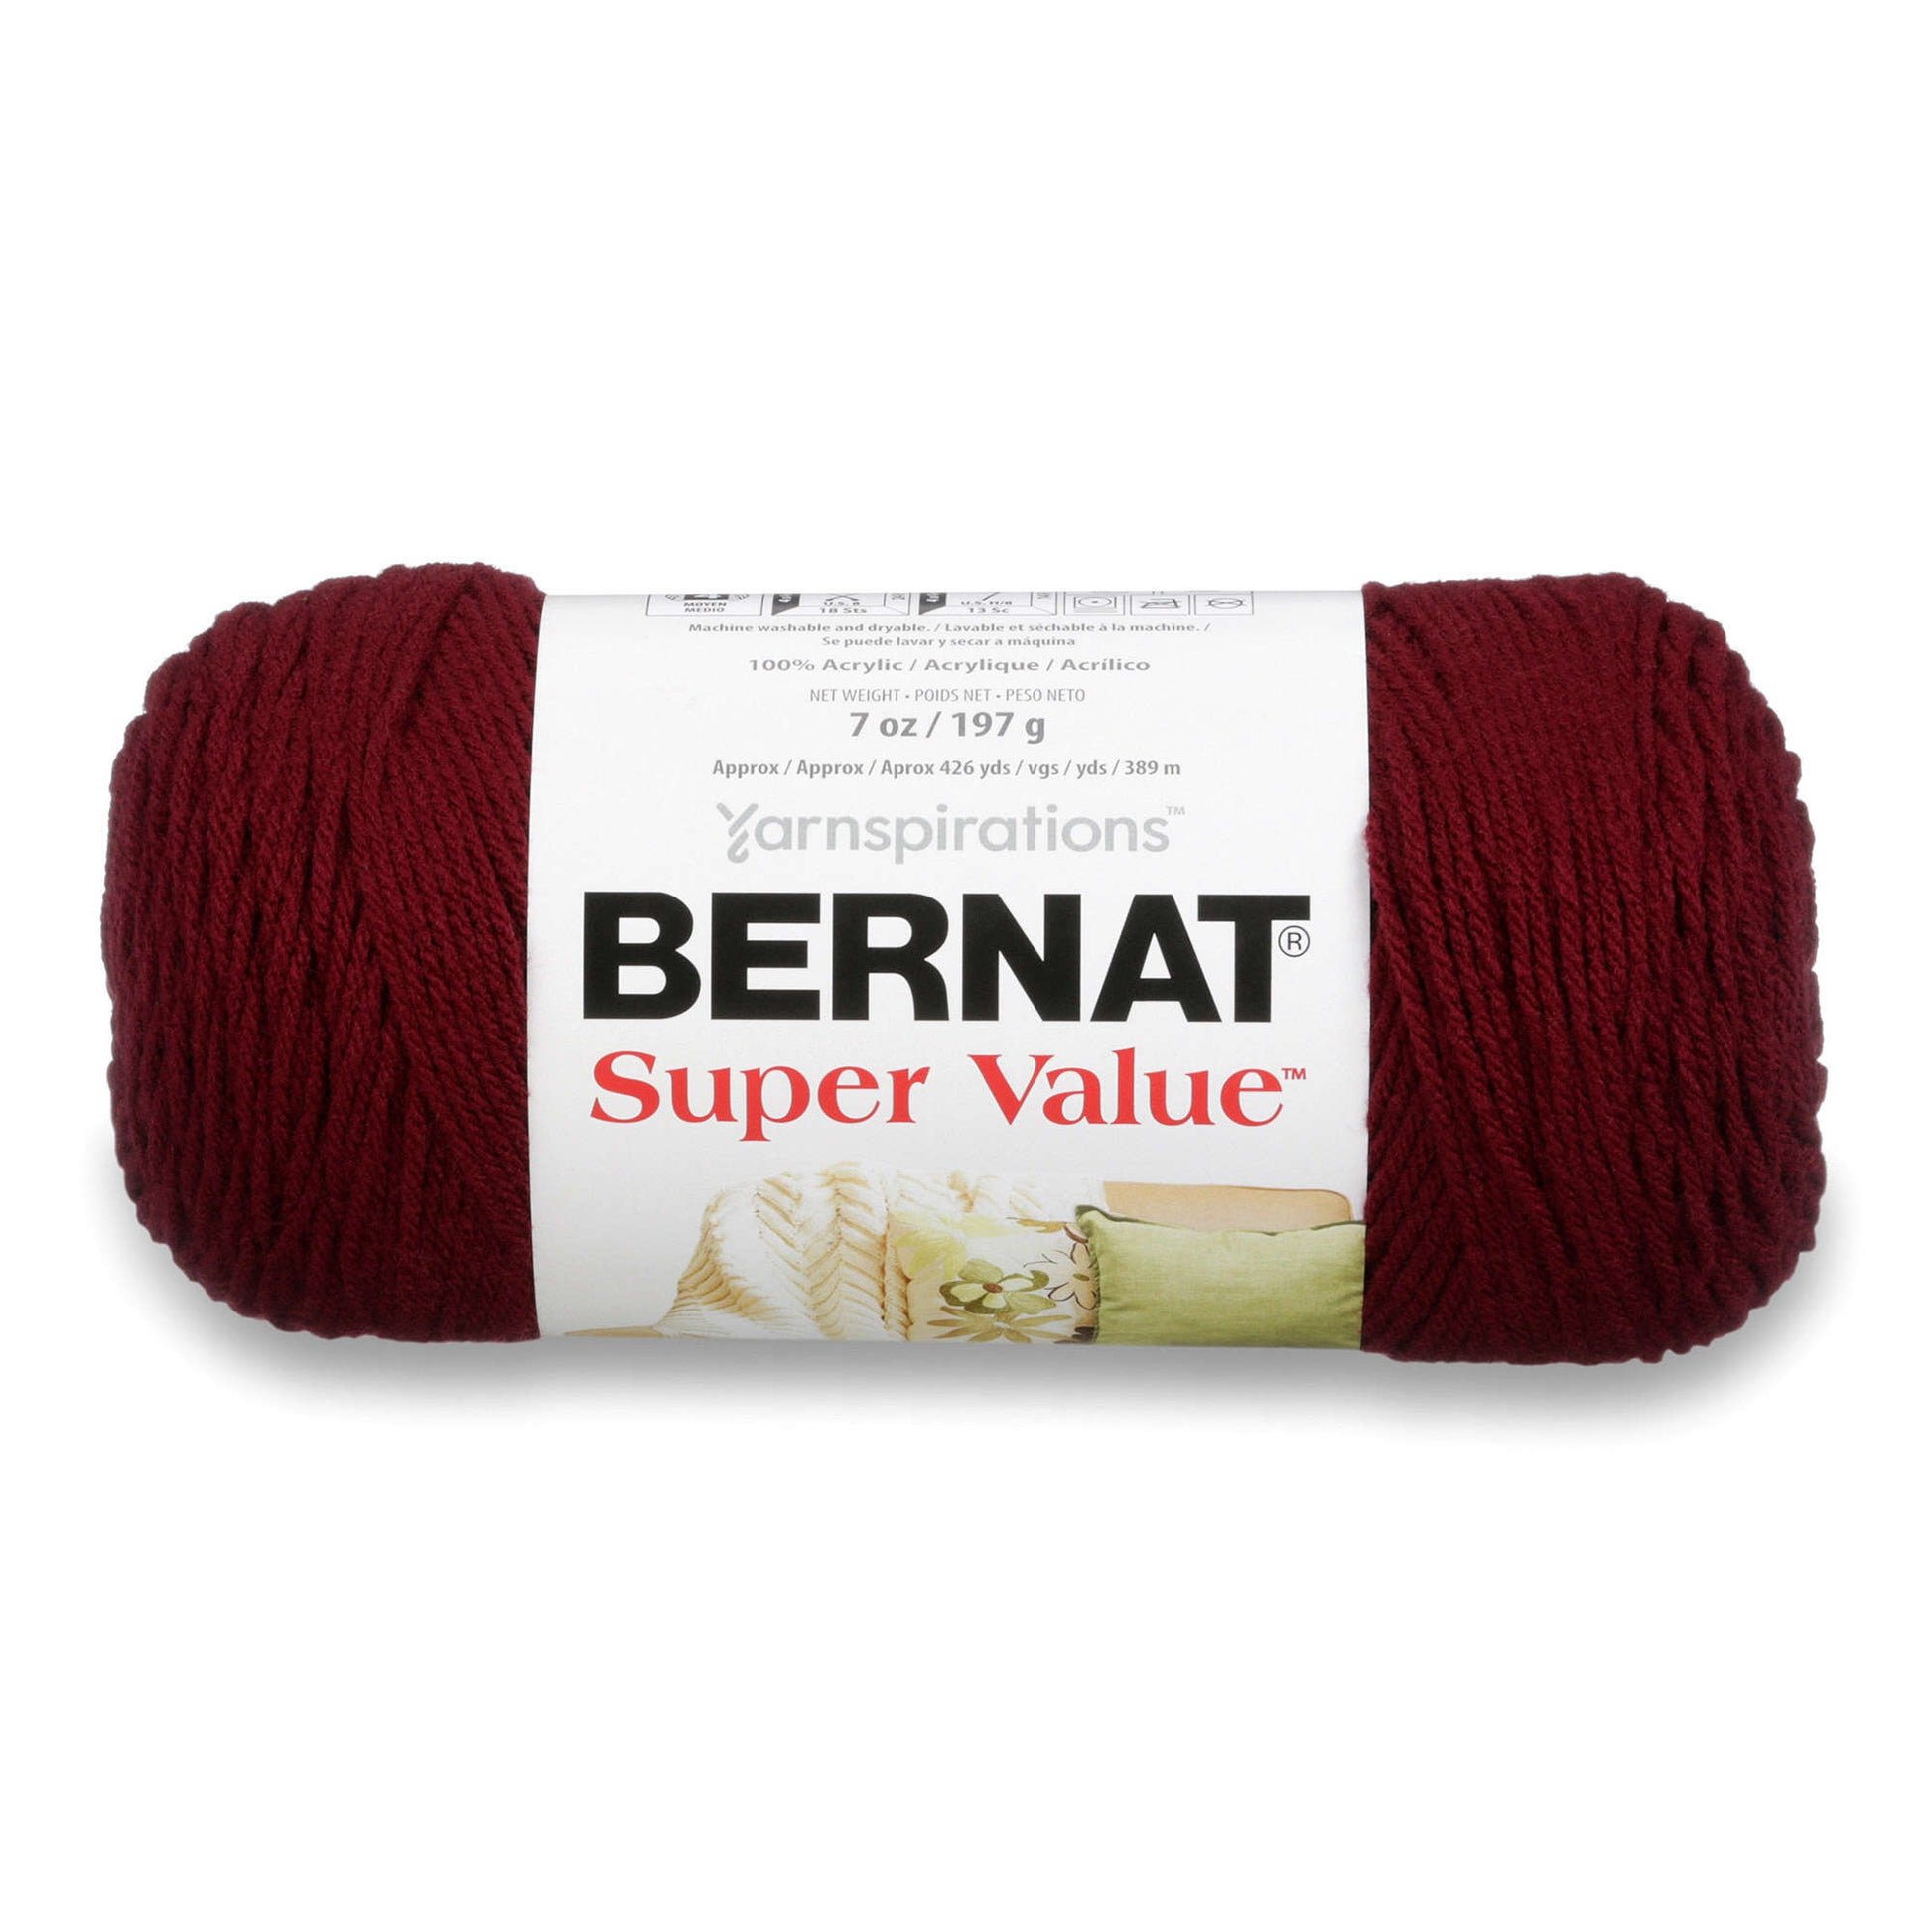 Bernat Super Value Yarn Burgundy